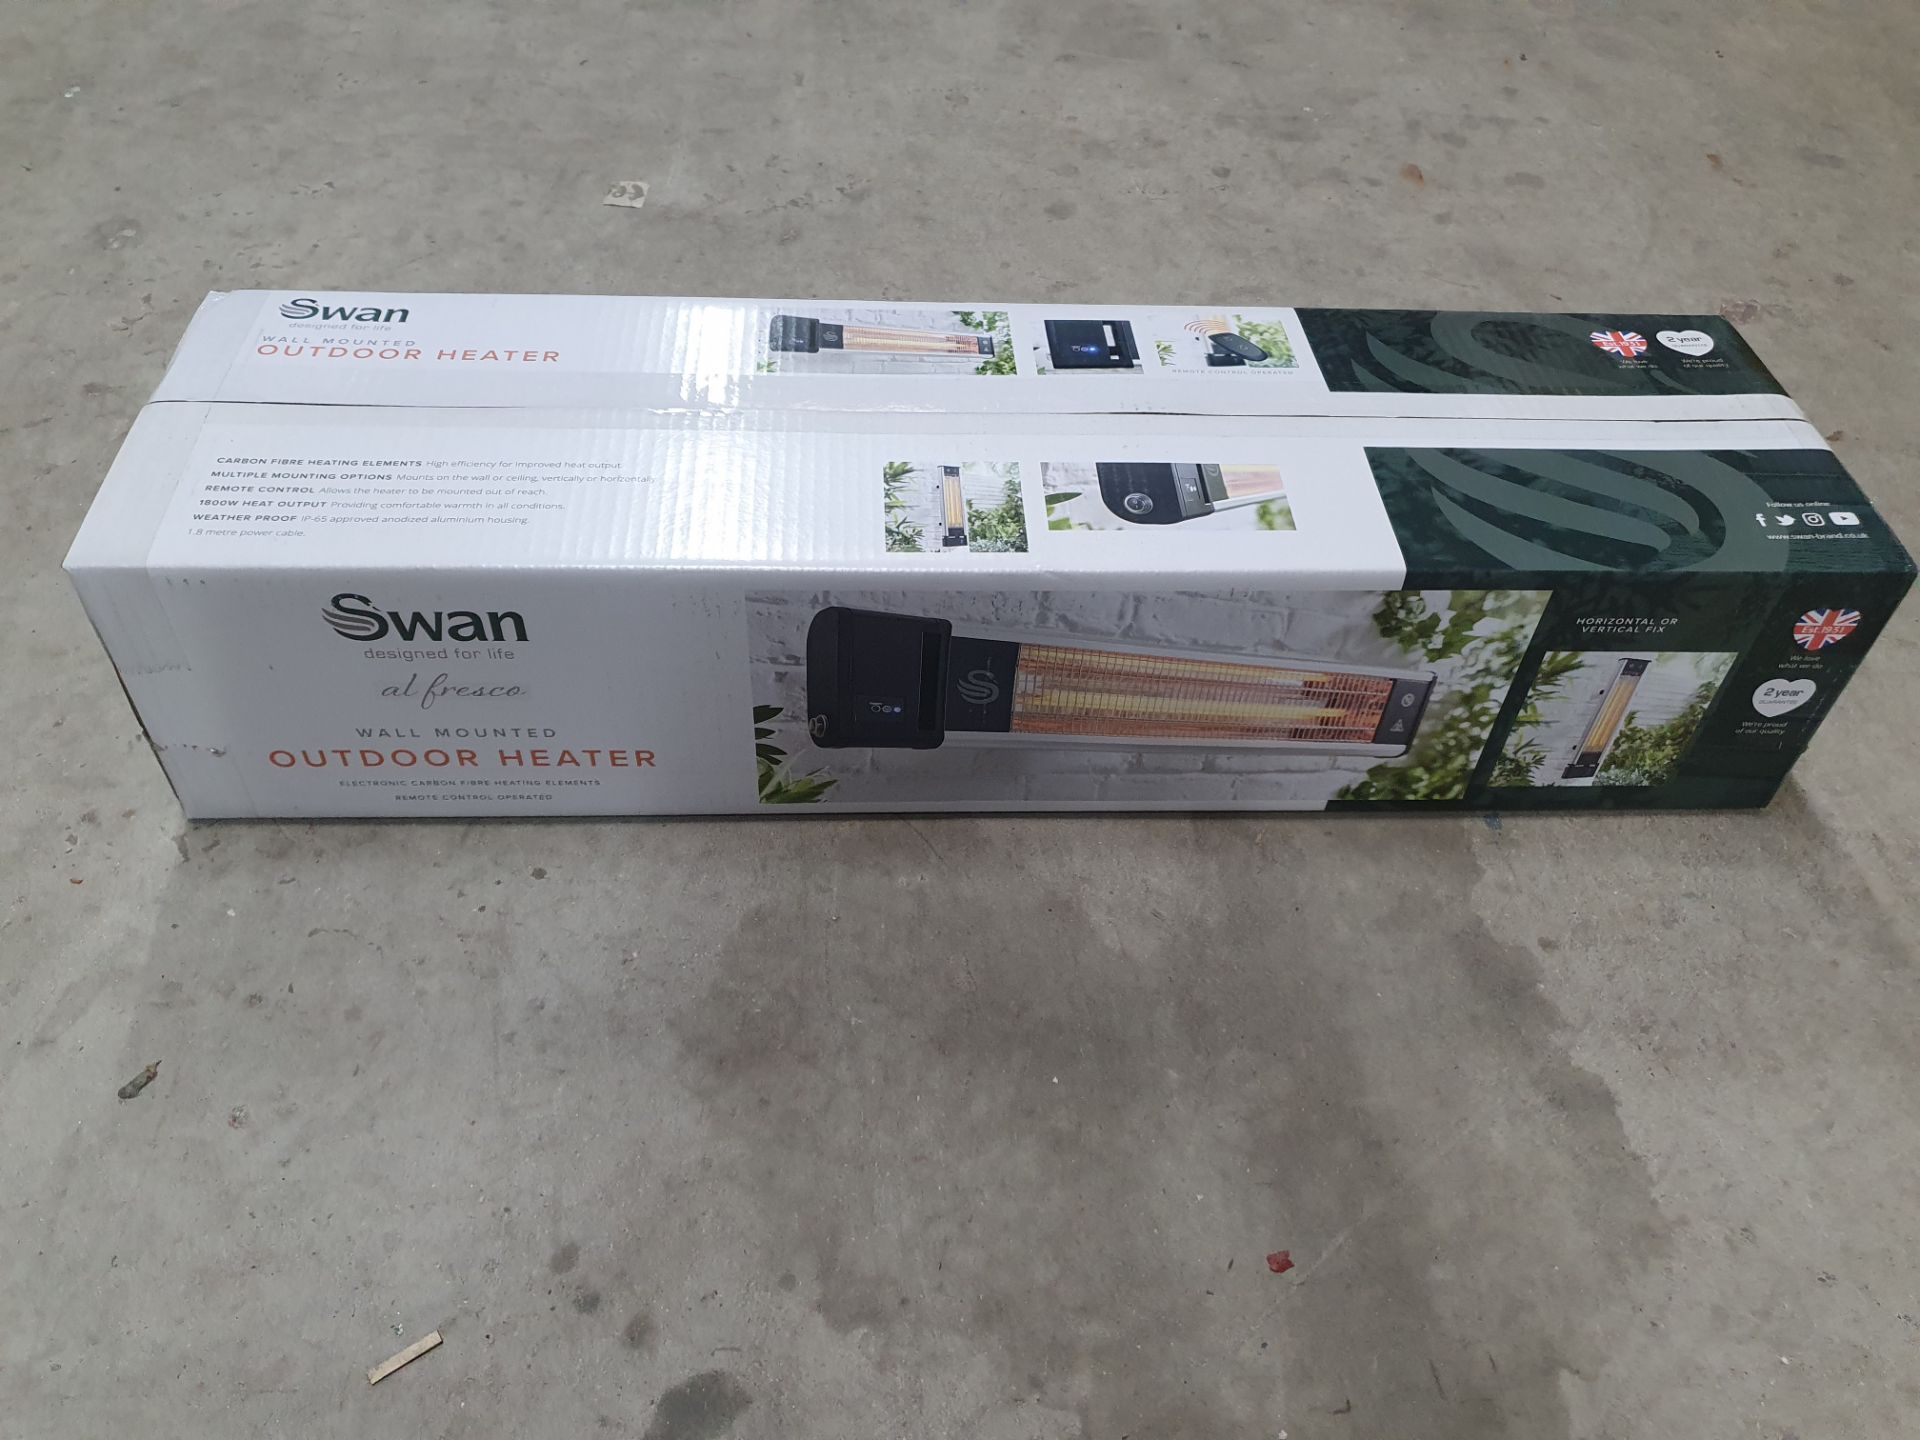 * Swan wall mounted outdoor heater SH16340N - RRP £110